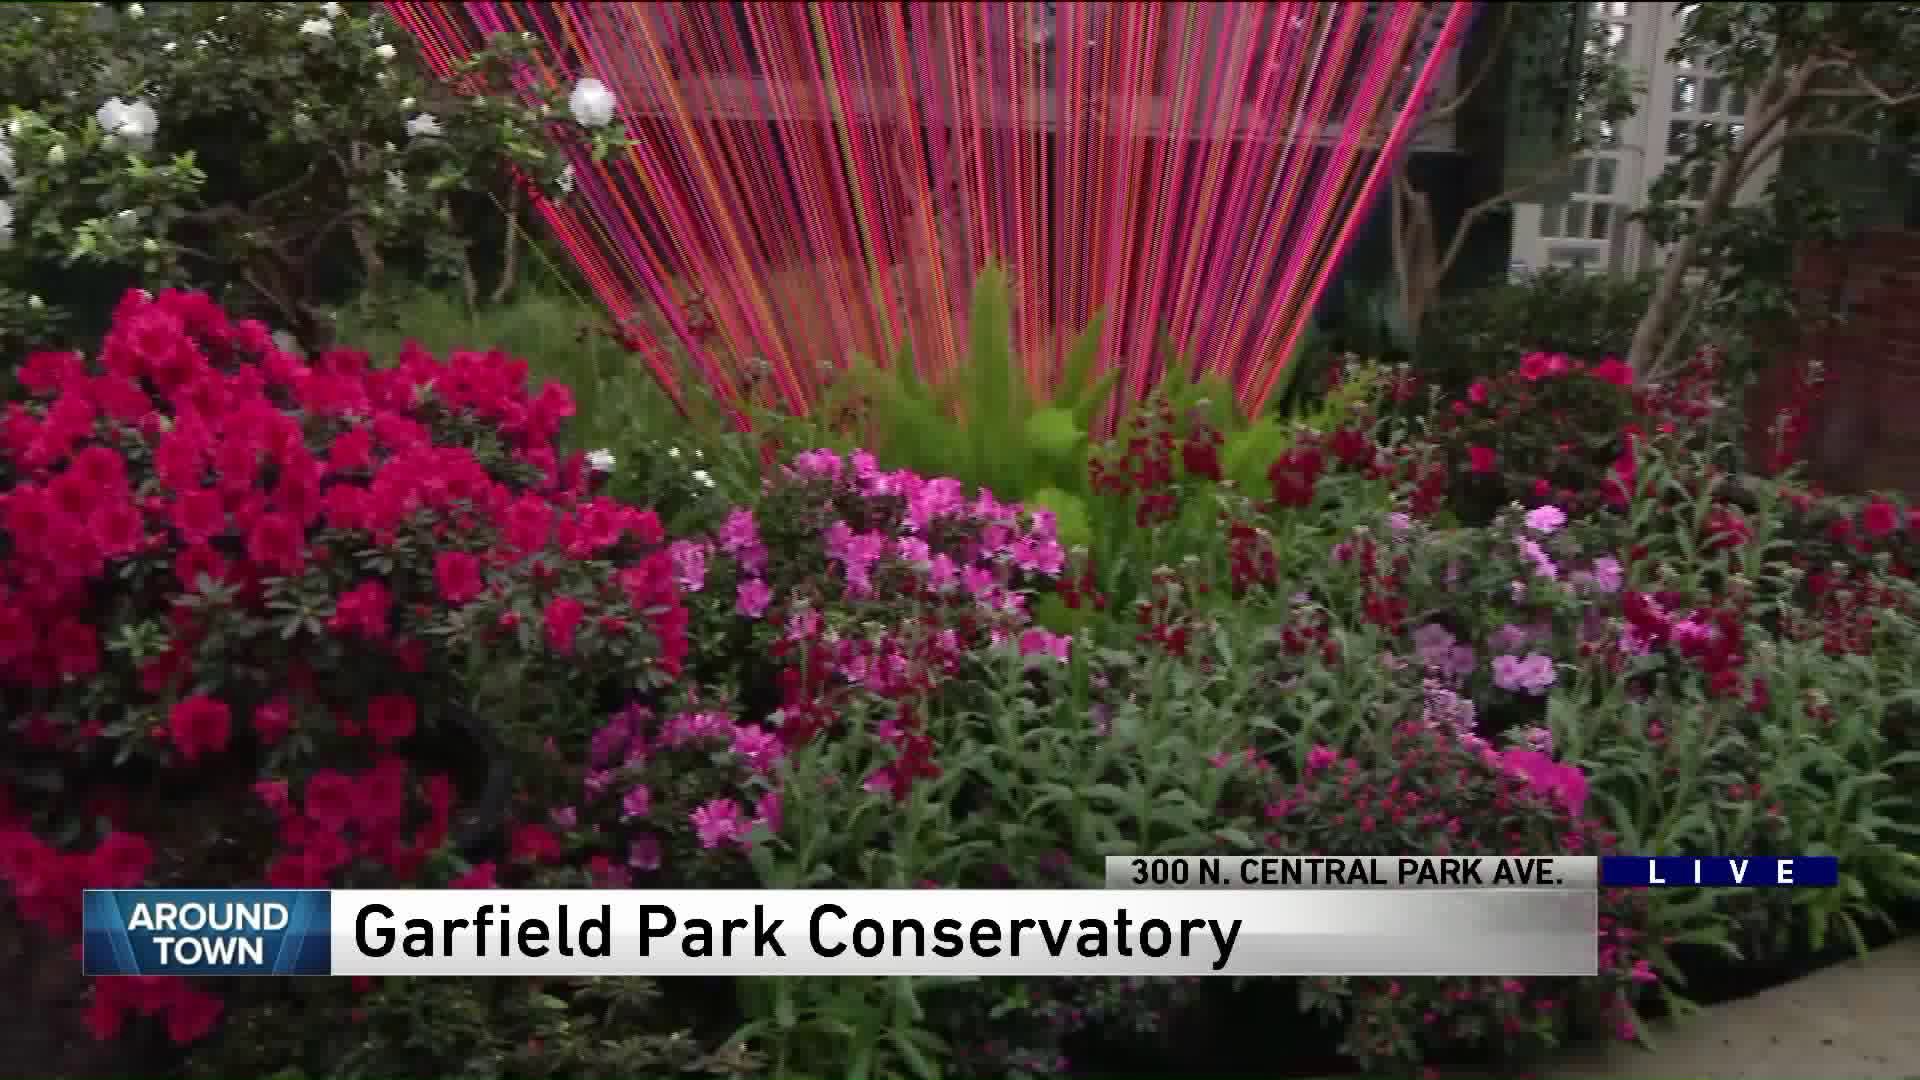 Around Town visits Garfield Park Conservatory